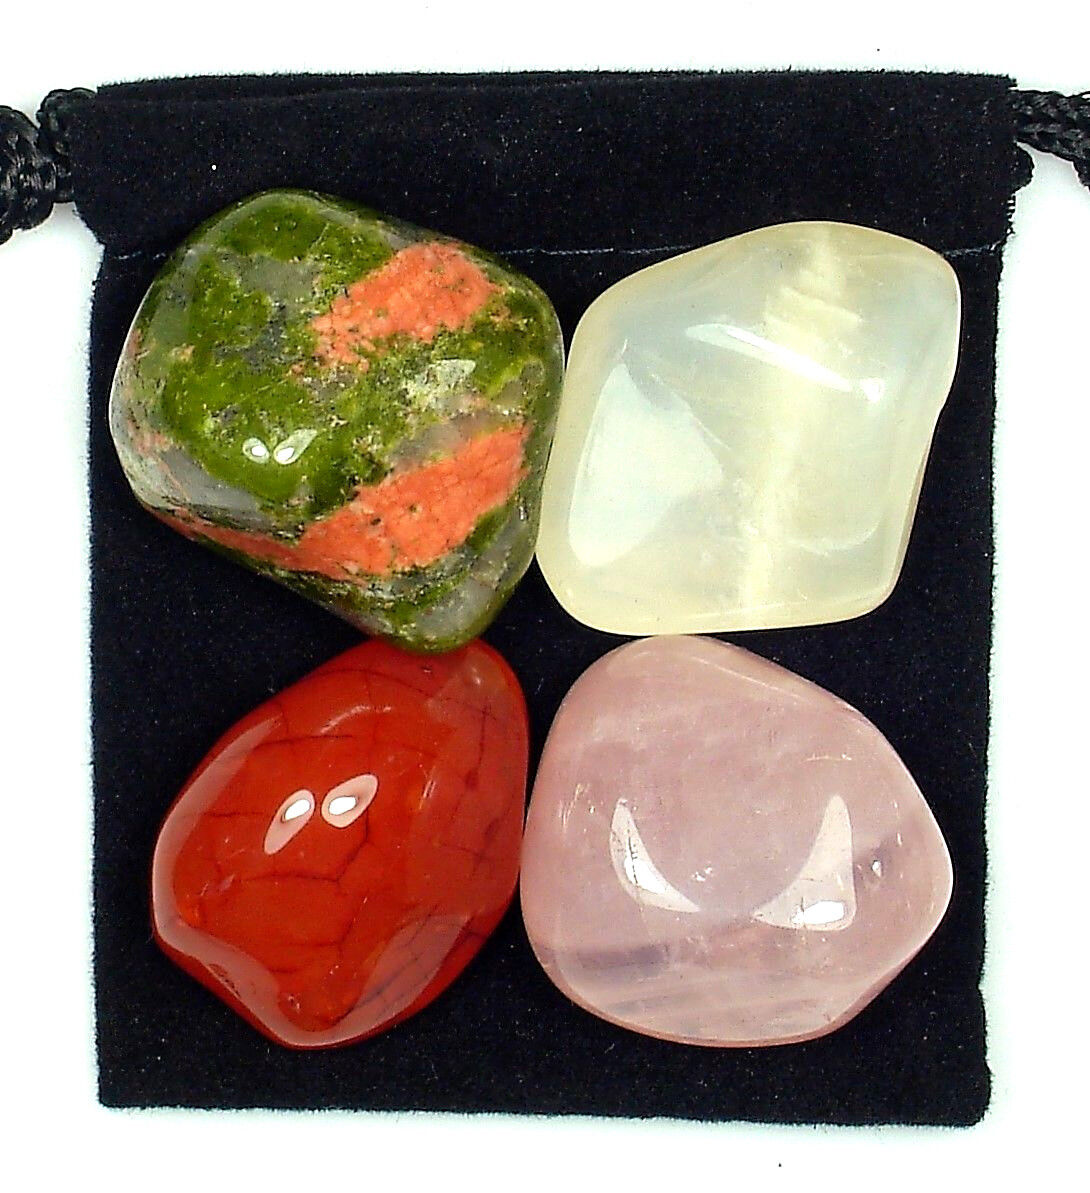 FERTILITY HELP Tumbled Crystal Healing Set = 4 Stones + Pouch + Description Card